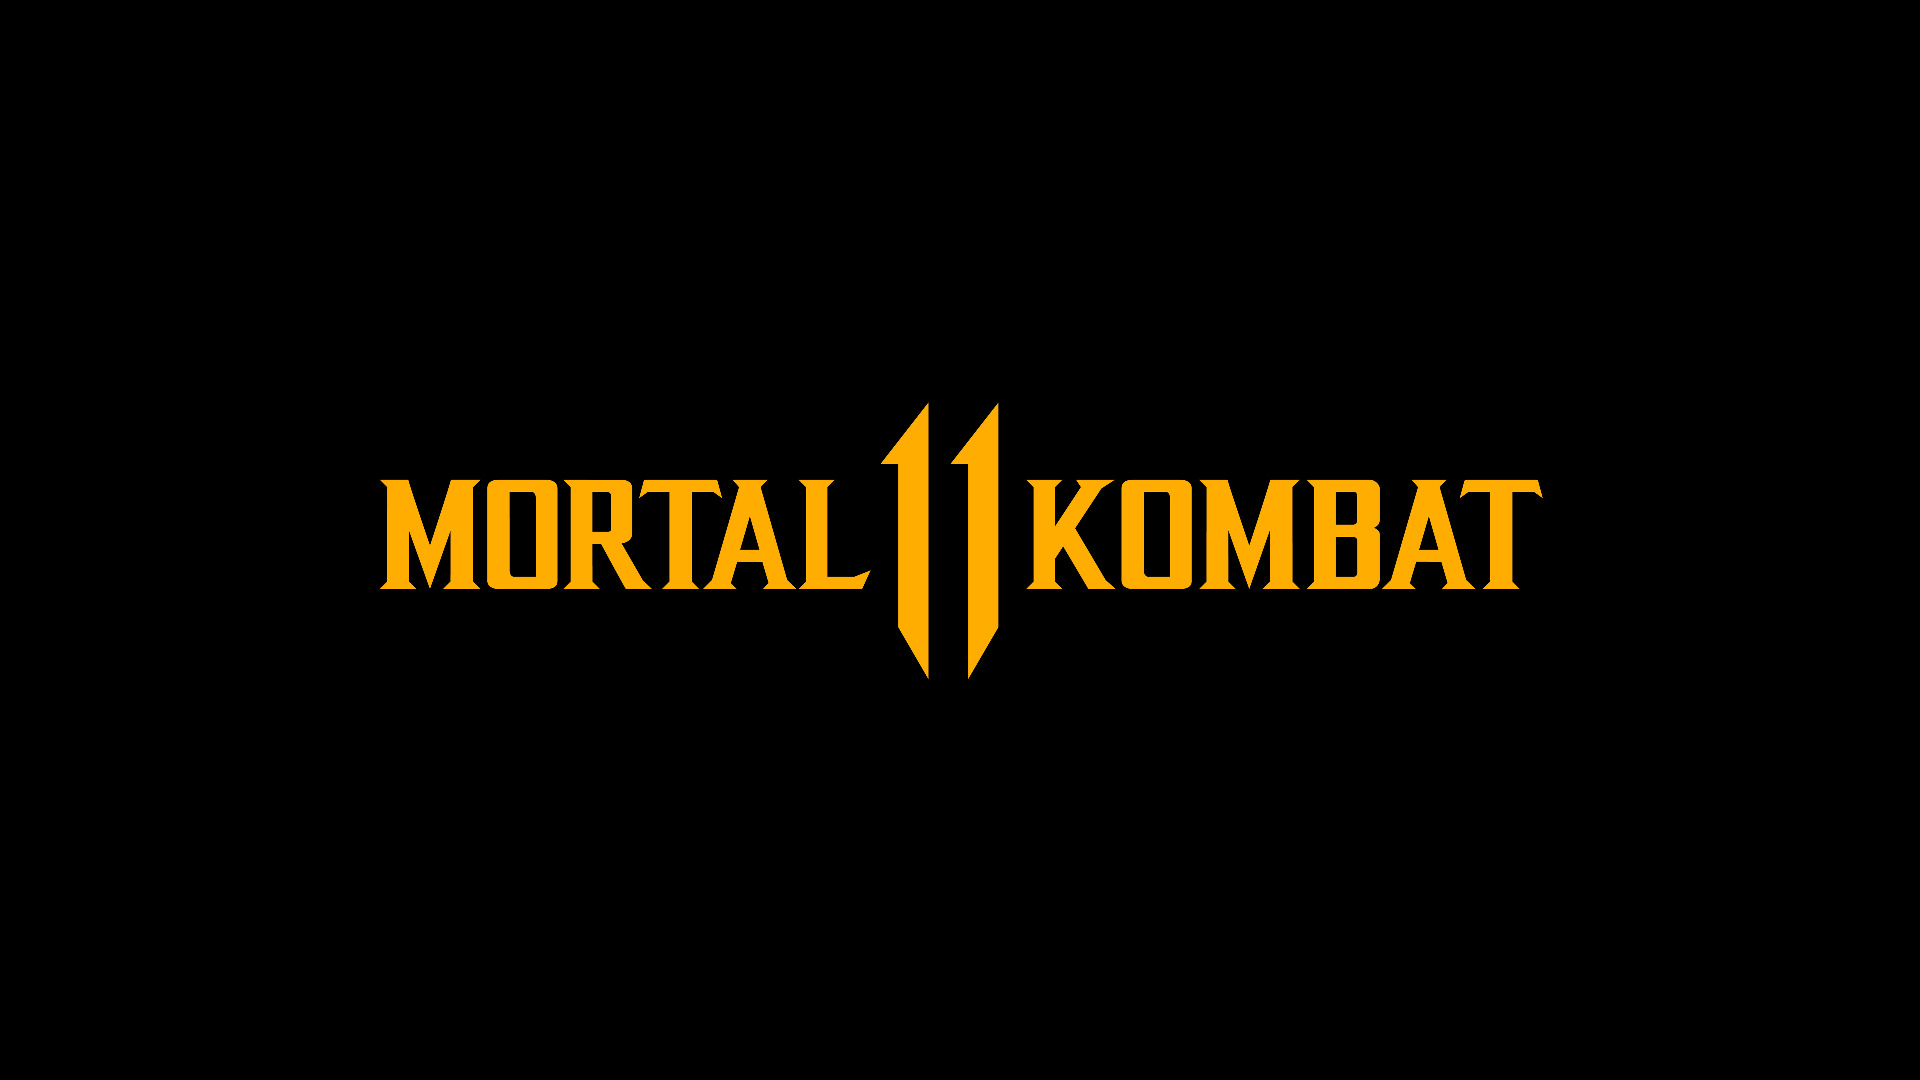 Video Game Mortal Kombat 11 1920x1080